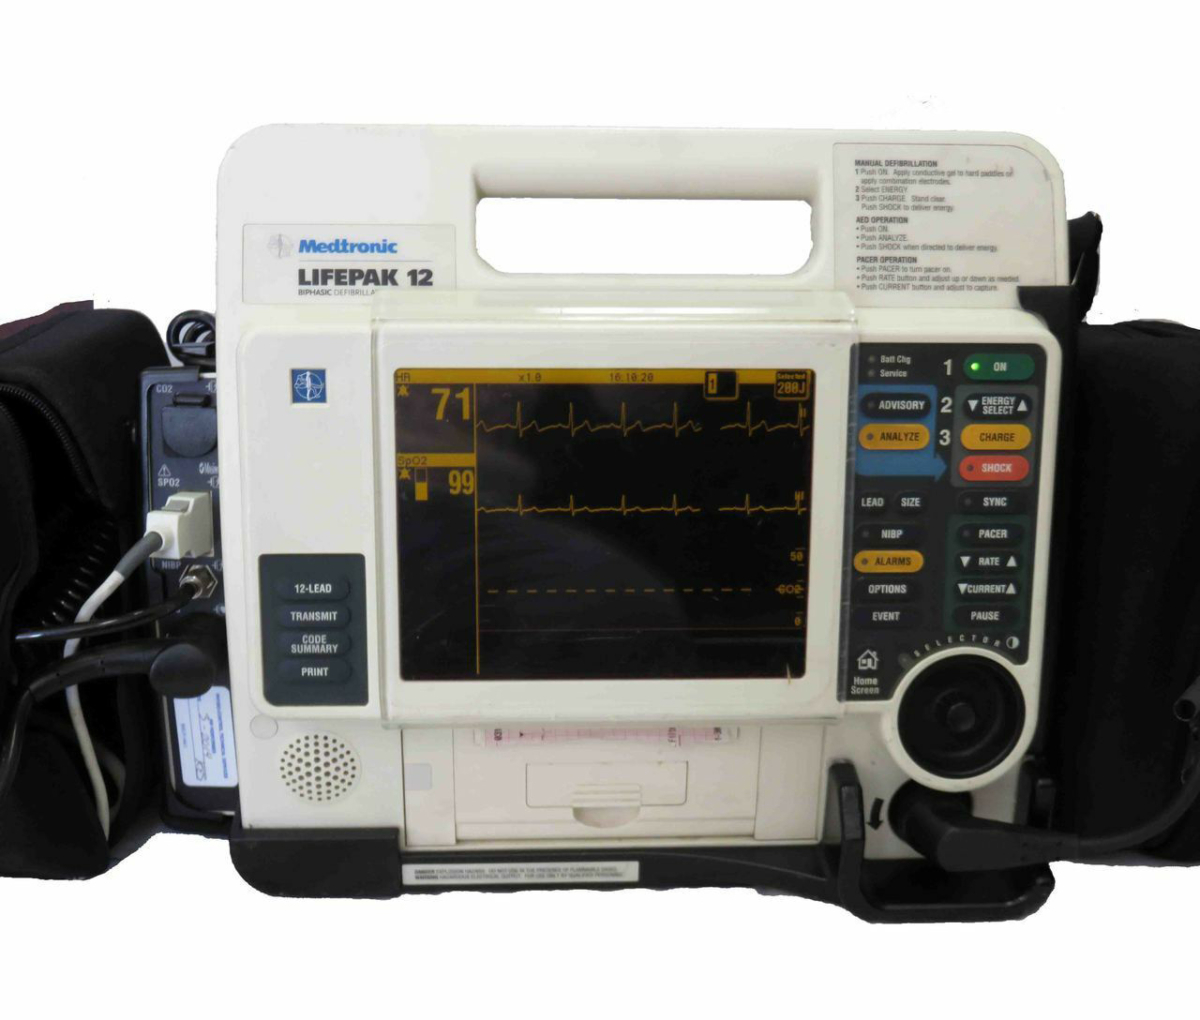 LIFEPAK 12 Monitor Defibrillator - Screen